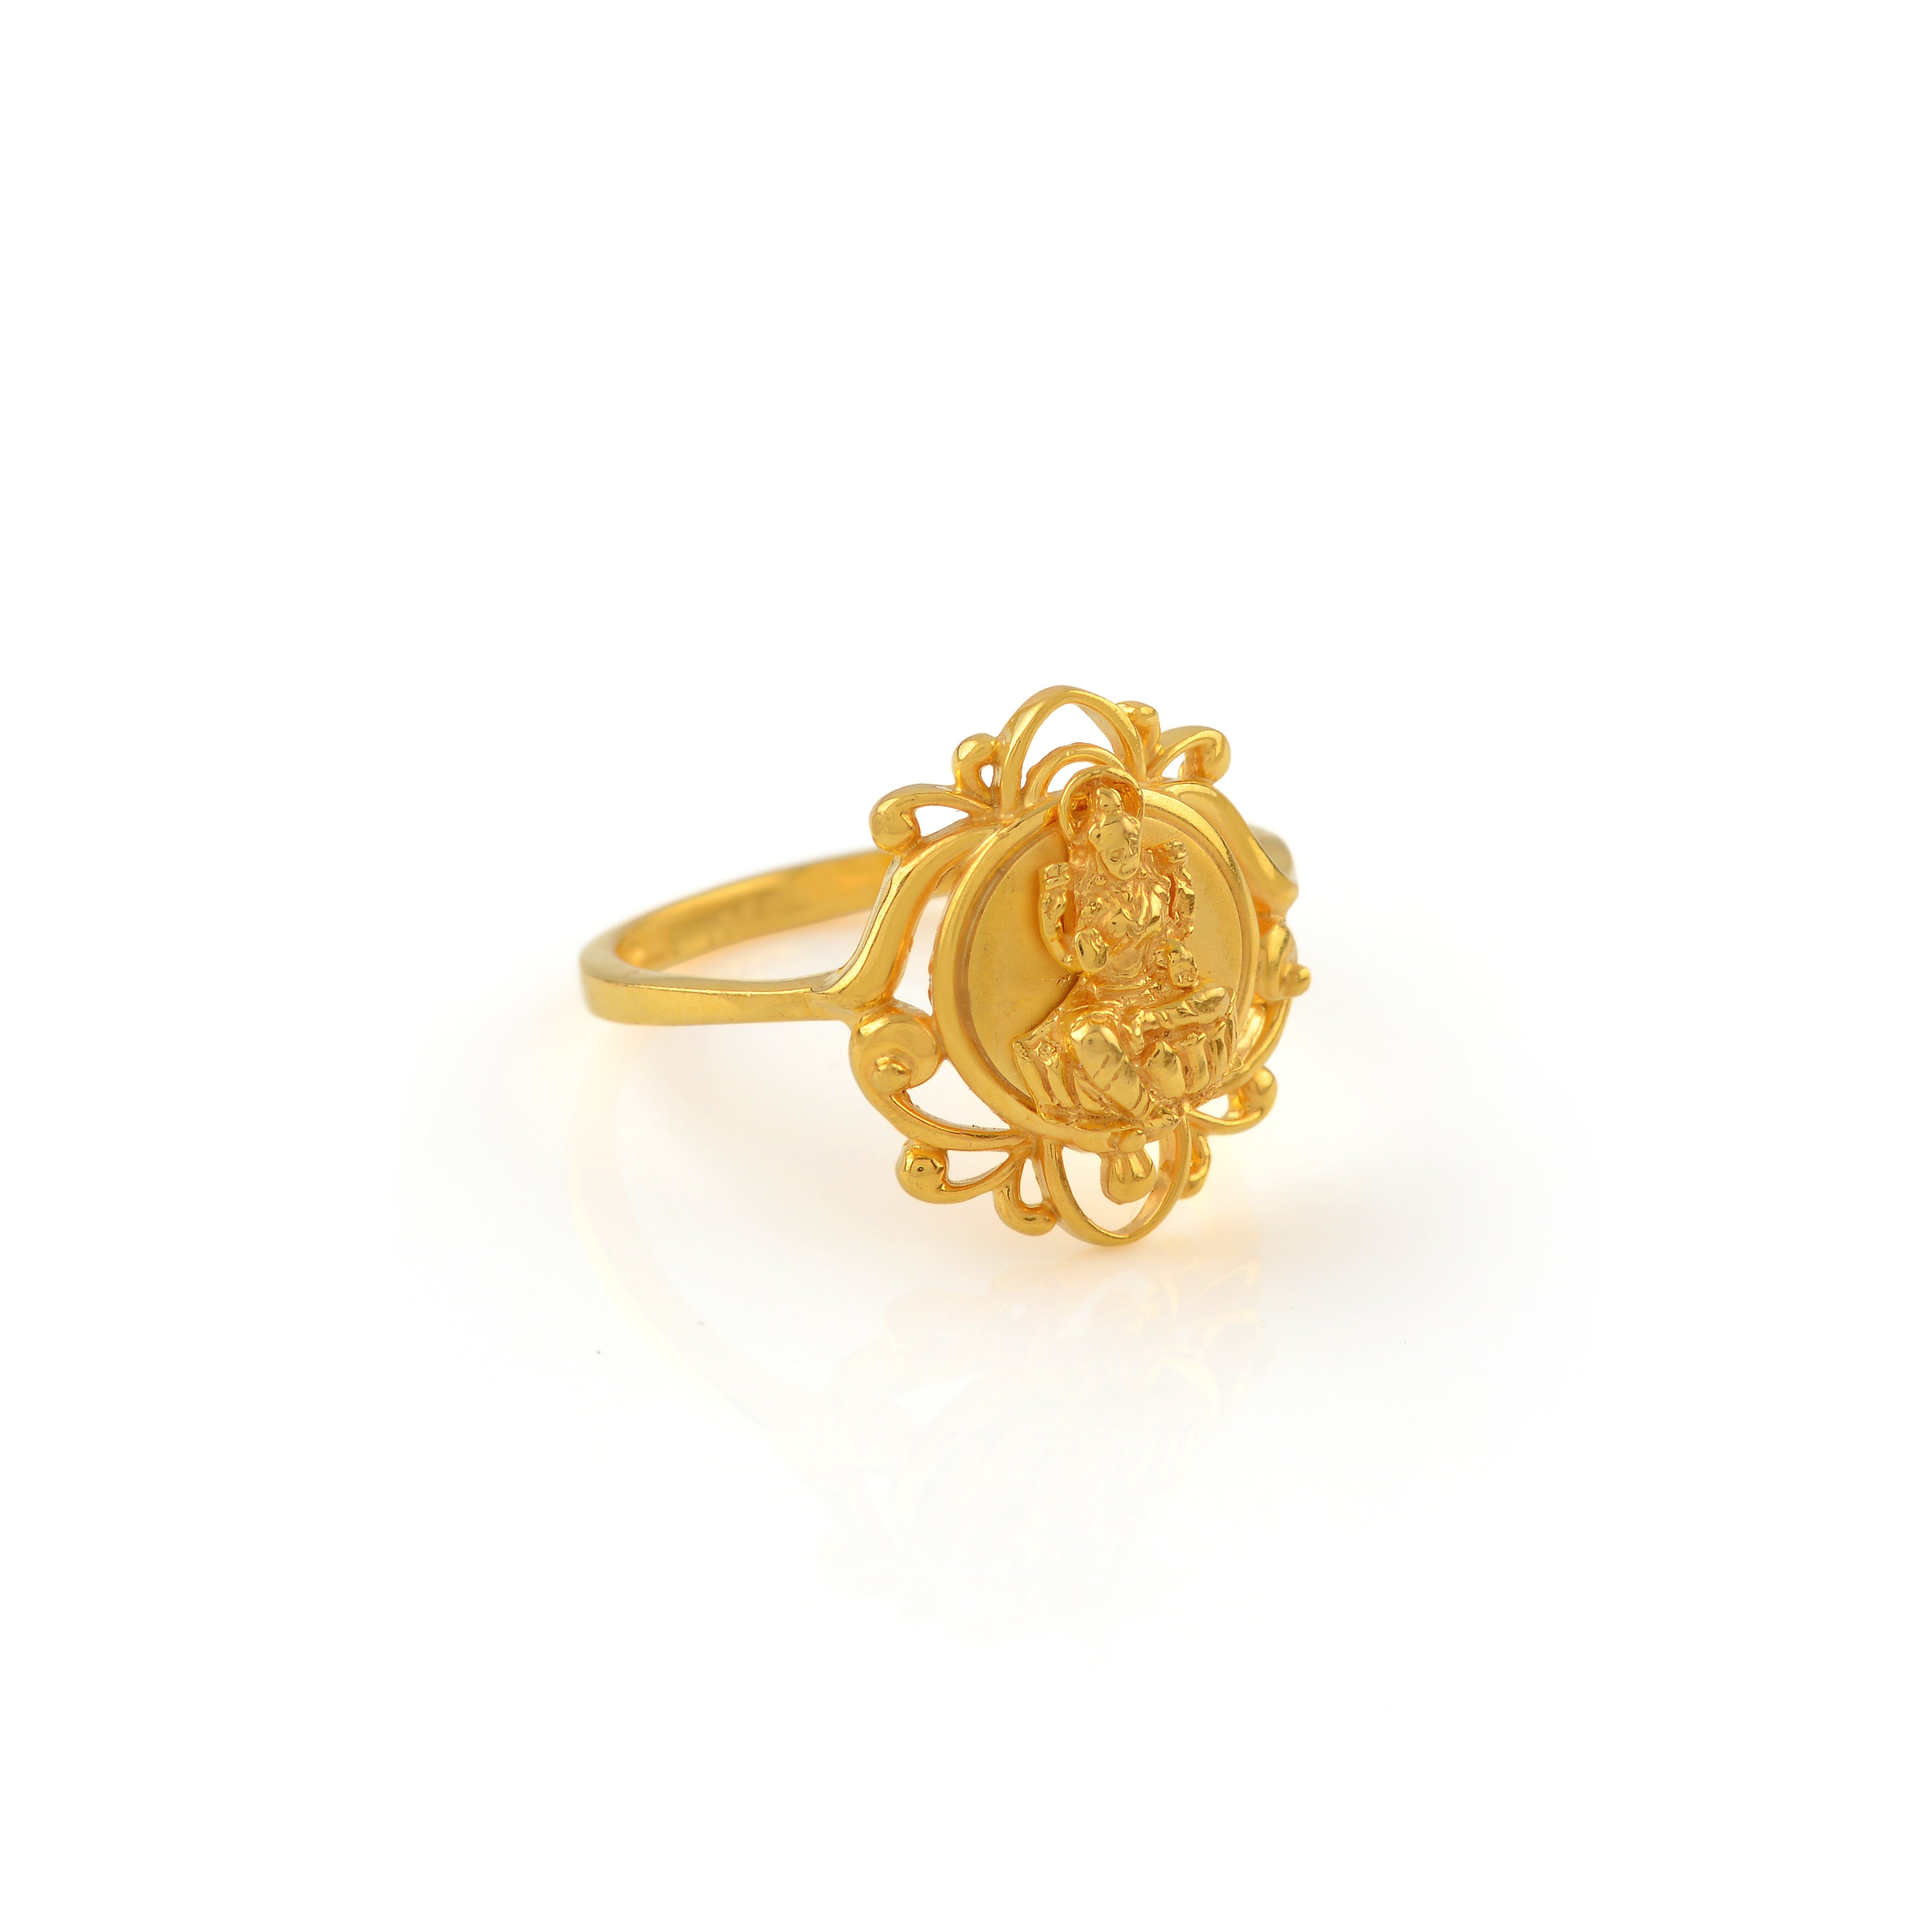 Latest Light weight gold Finger ring design / Latest Gold Finger Rings  designs collections | #Ring… | Gold finger rings, Latest gold ring designs, Gold  ring designs